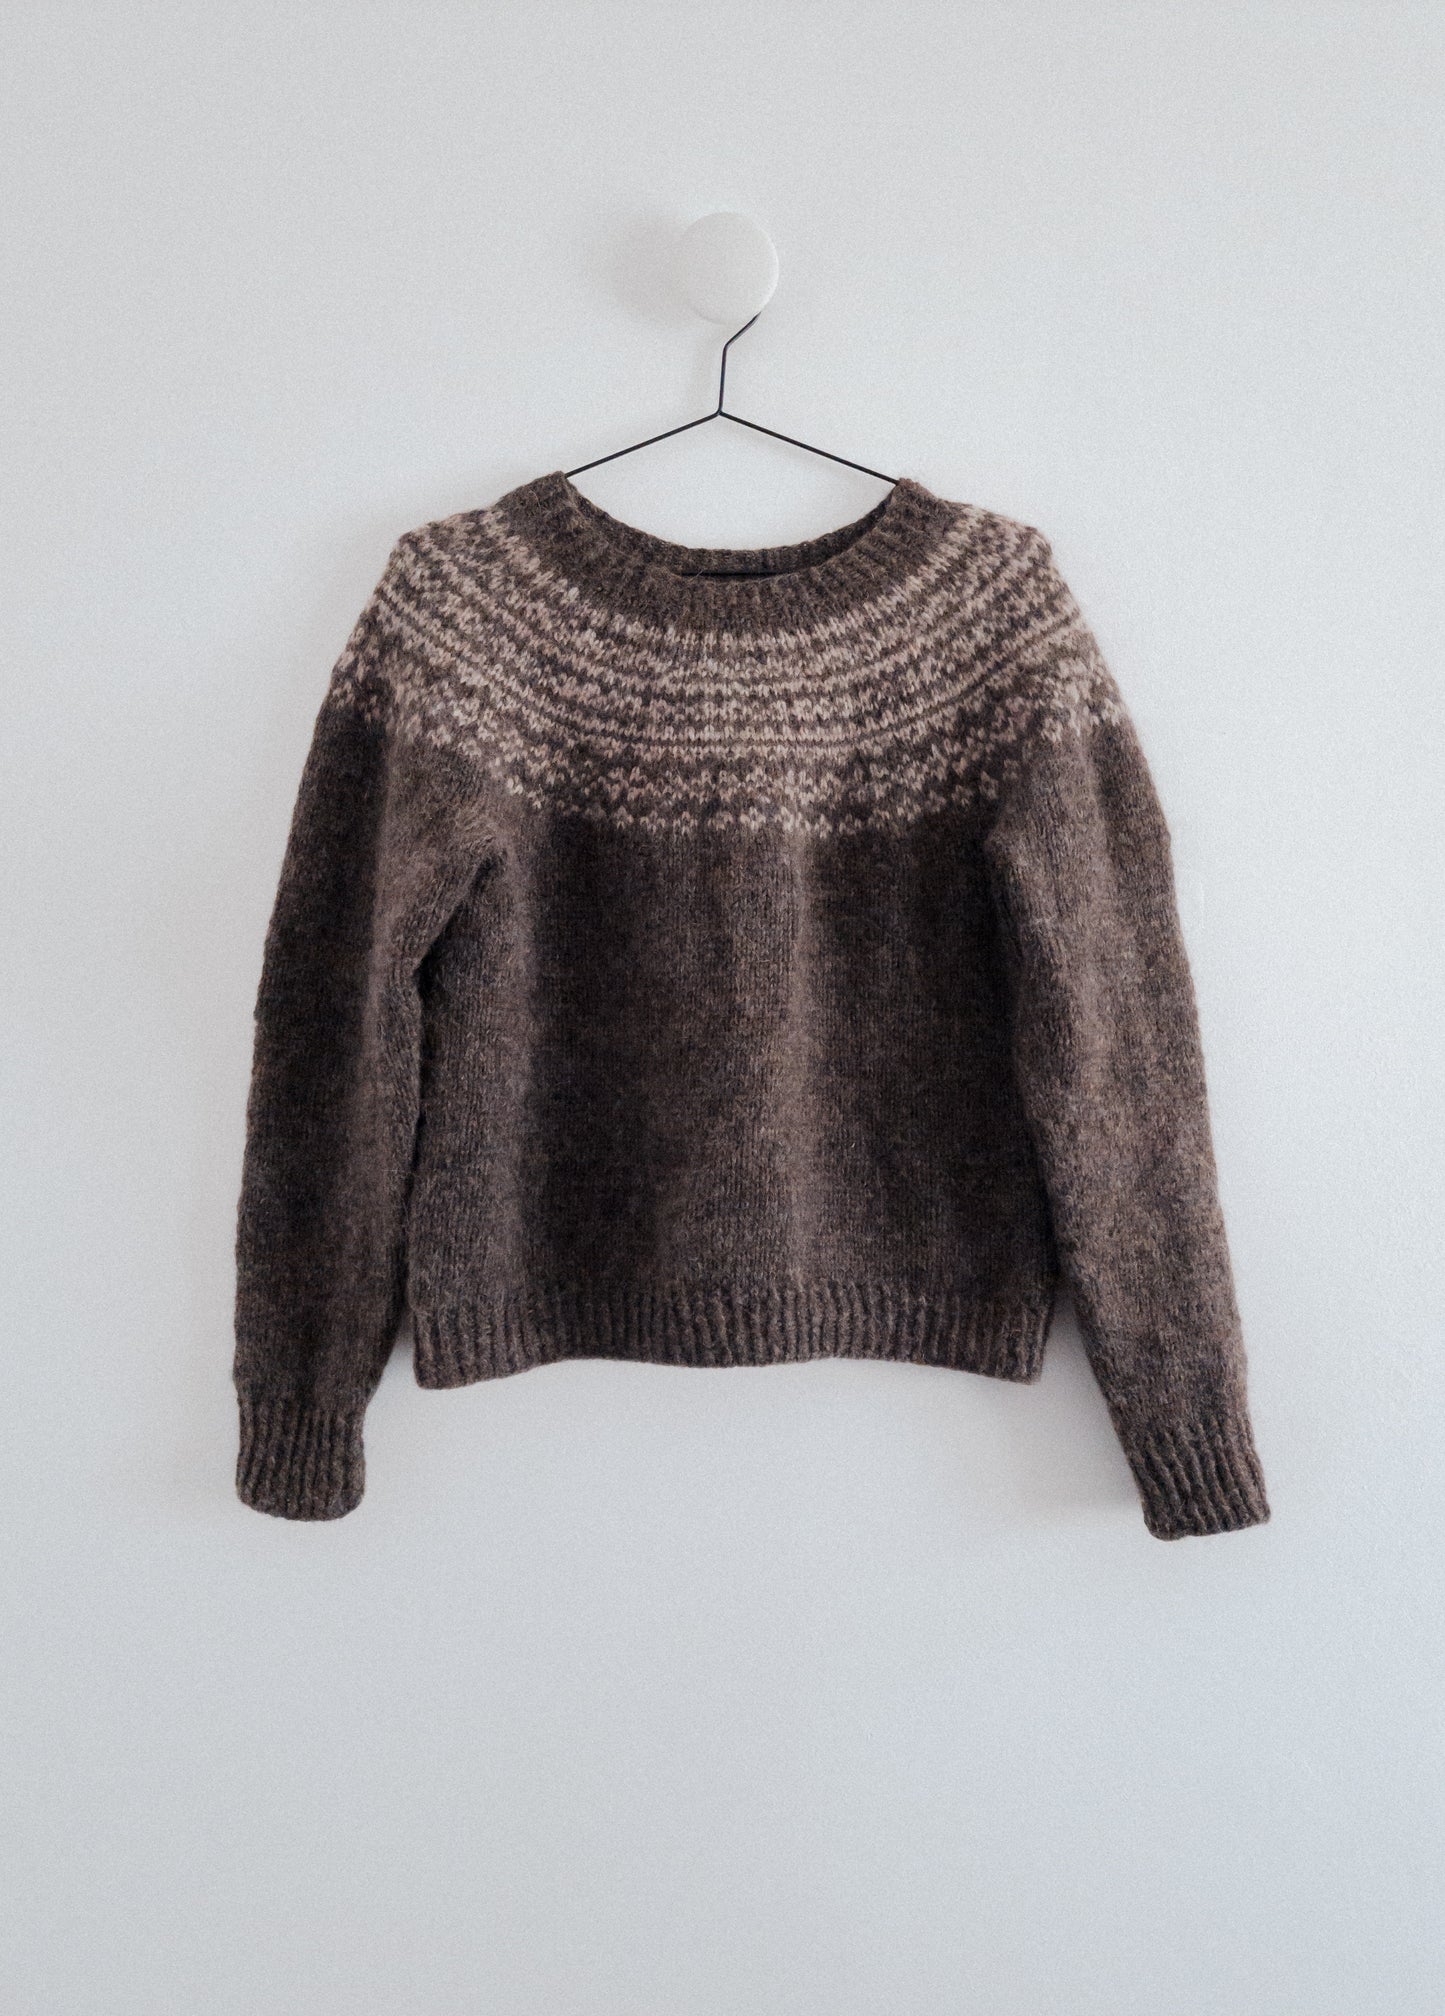 Barren Land Sweater - Knitting Pattern – Woodlandsknits